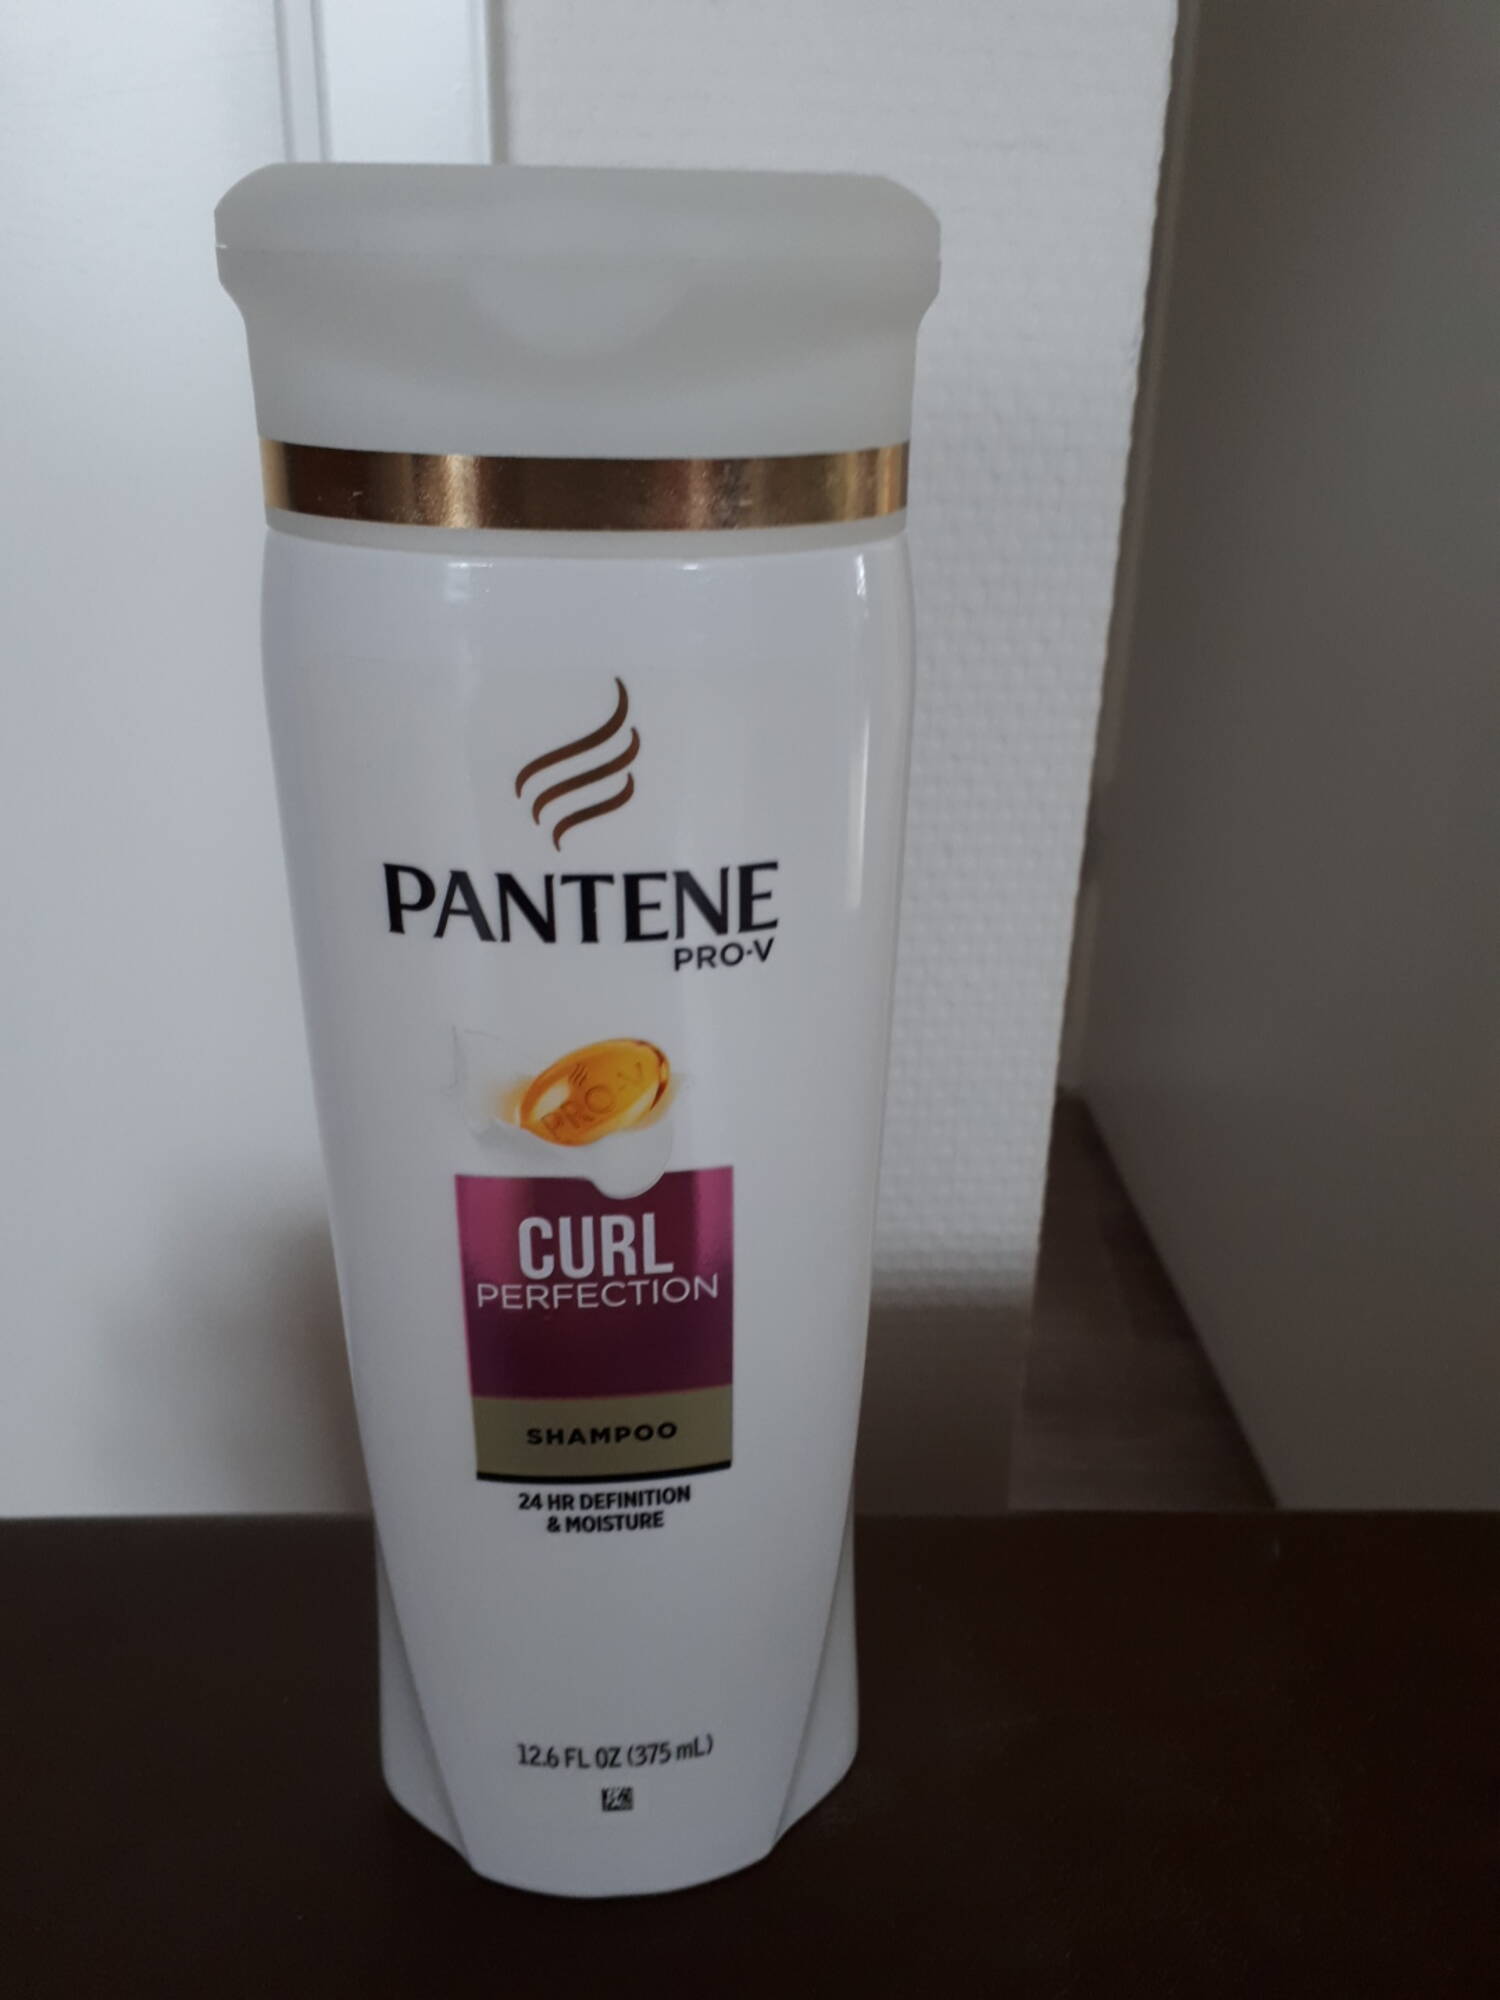 PANTENE - Curl perfection - Shampoo